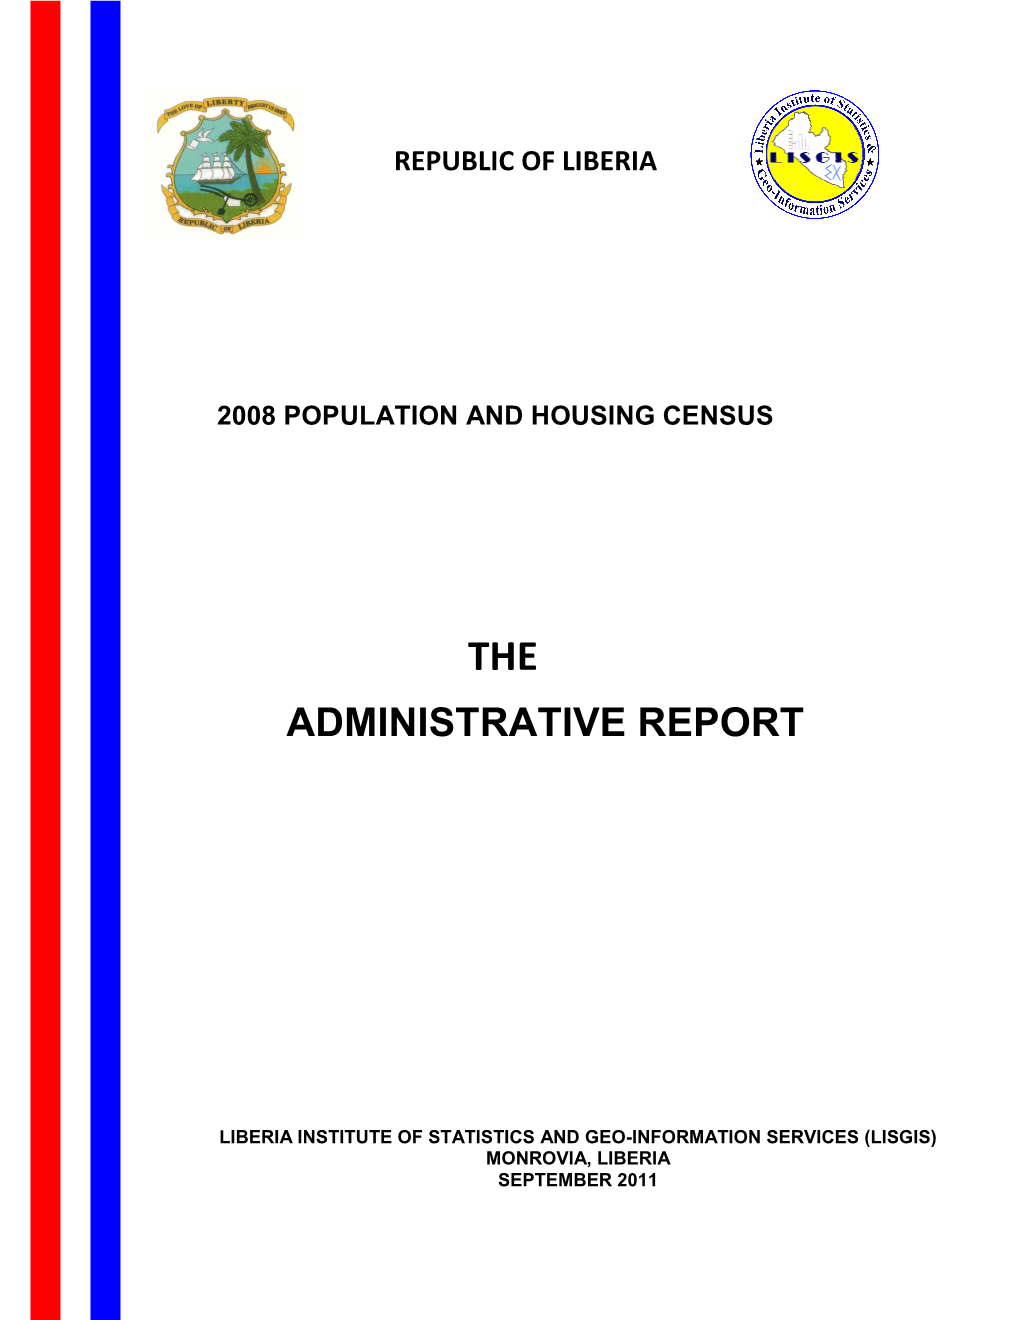 Administrative Report Final 210512.Pdf